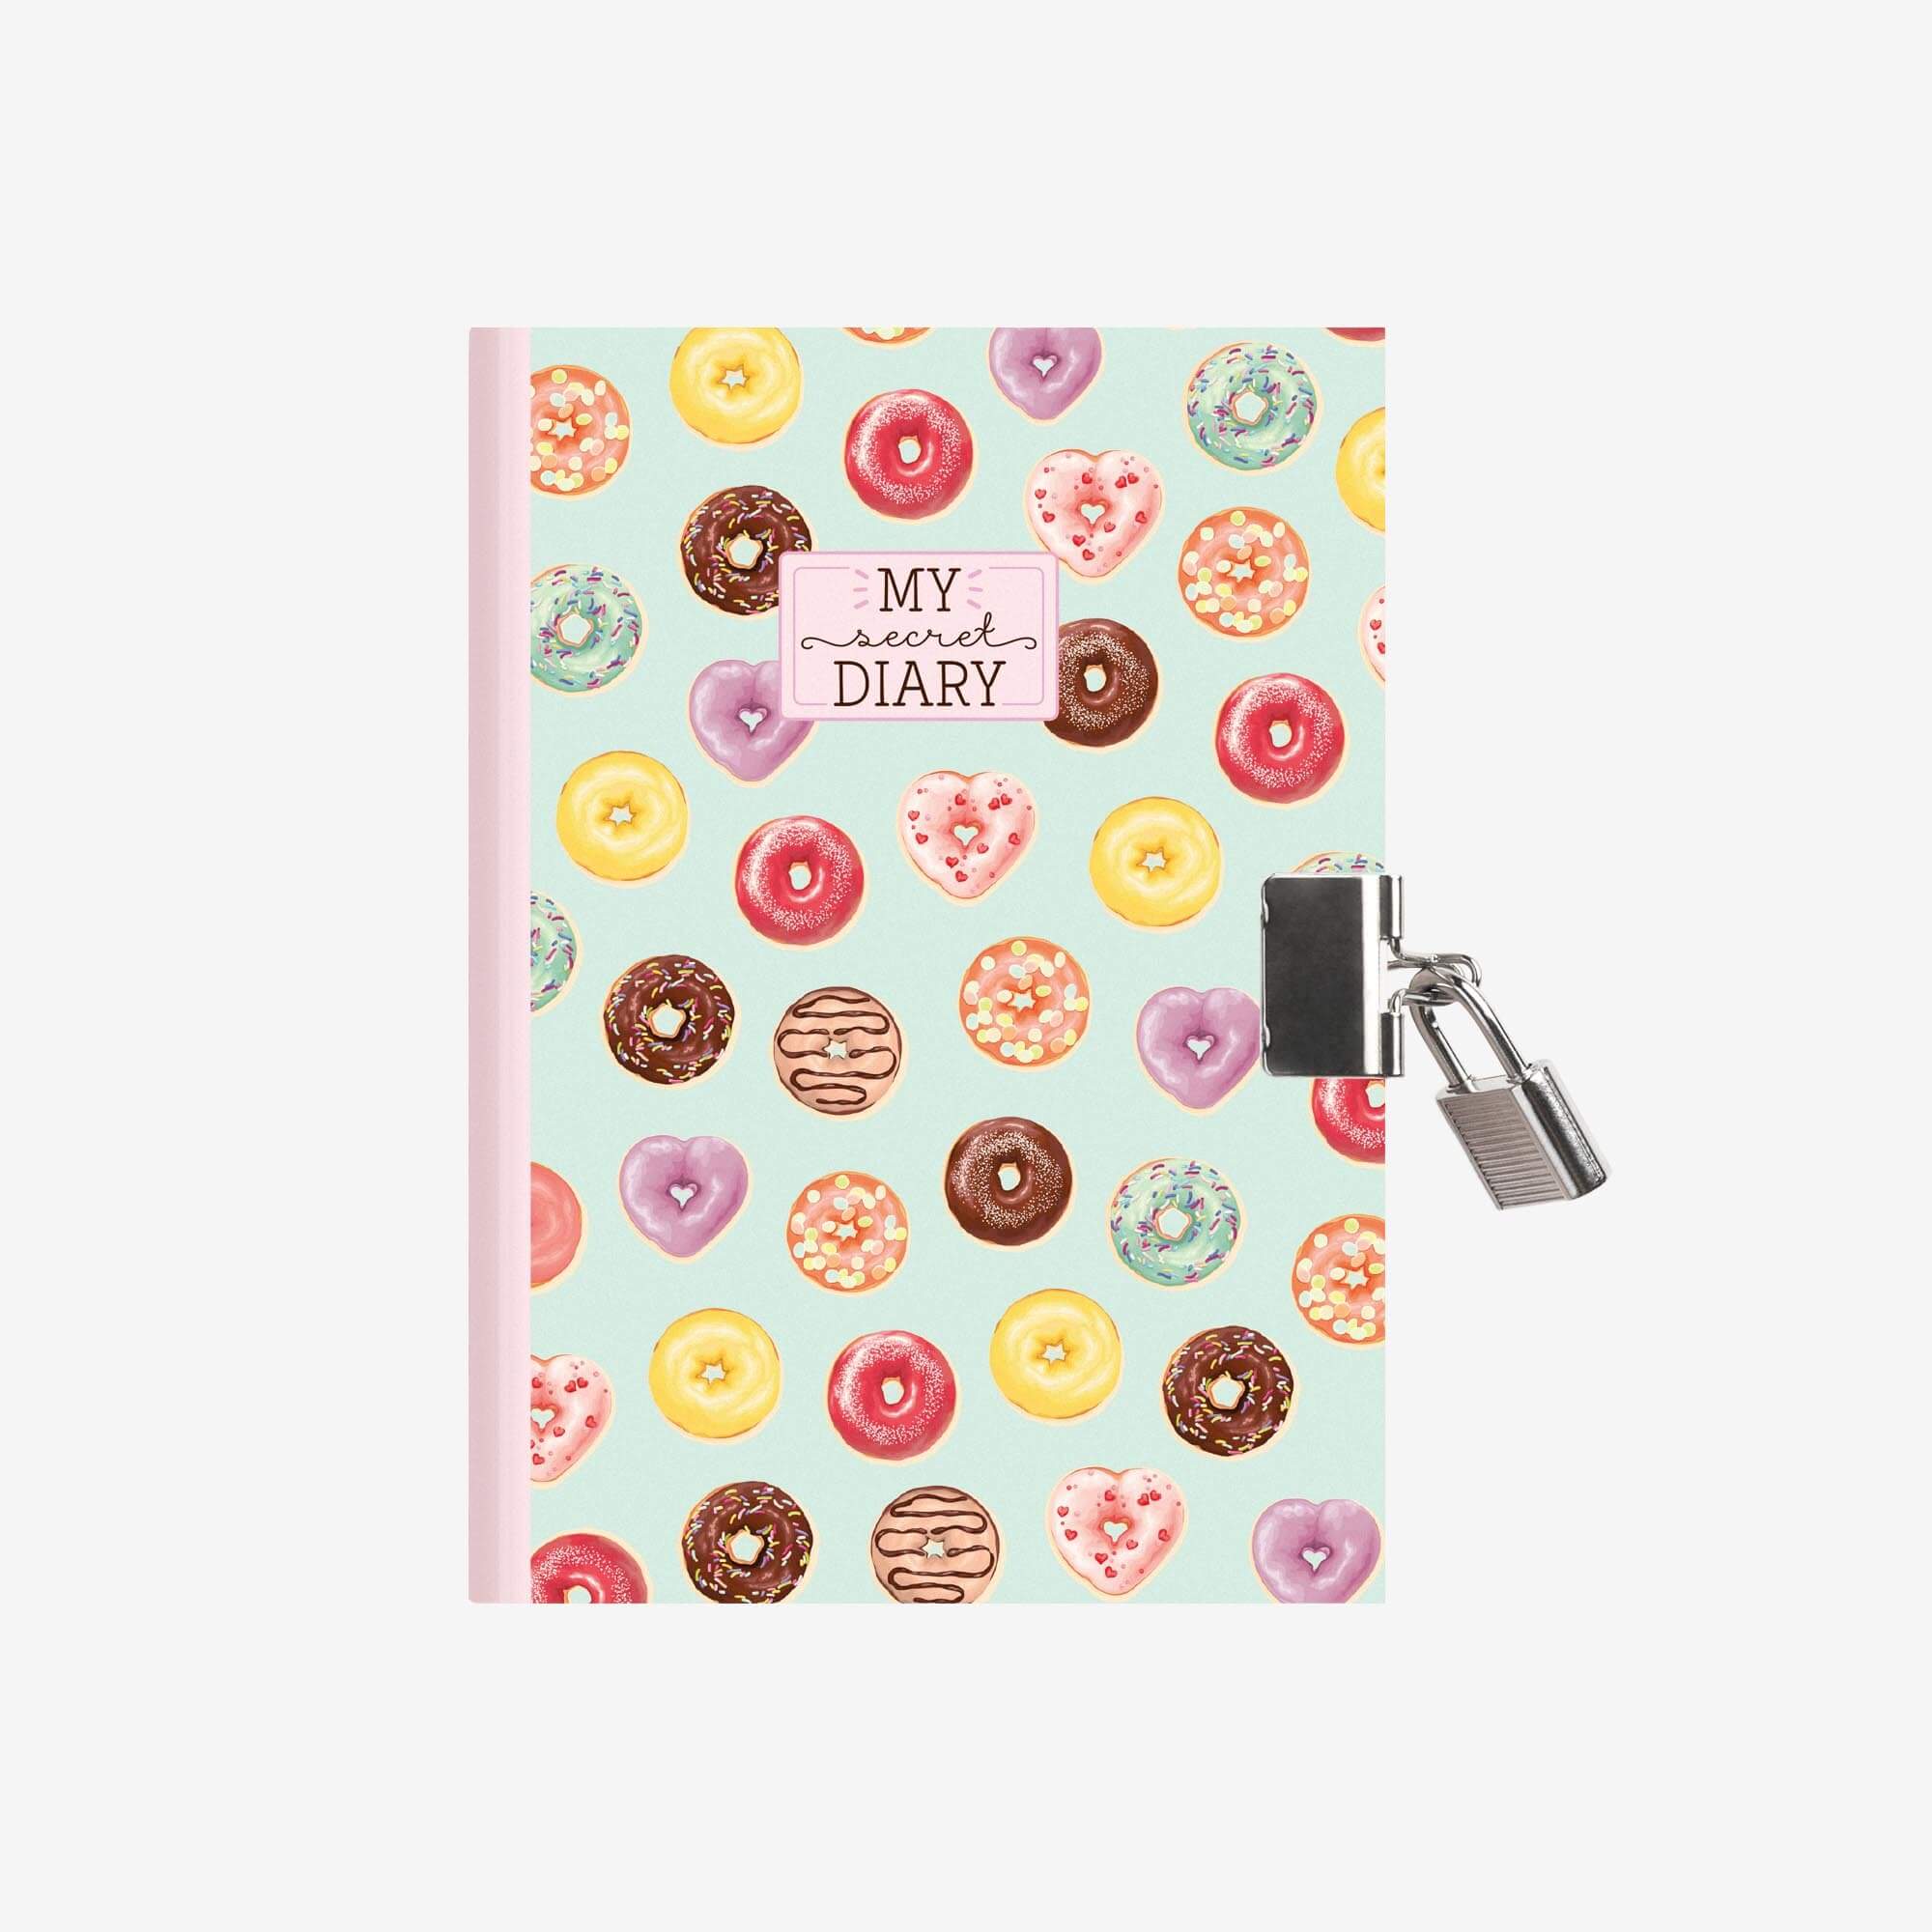 My Secret Diary - Journal intime avec cadenas Legami 